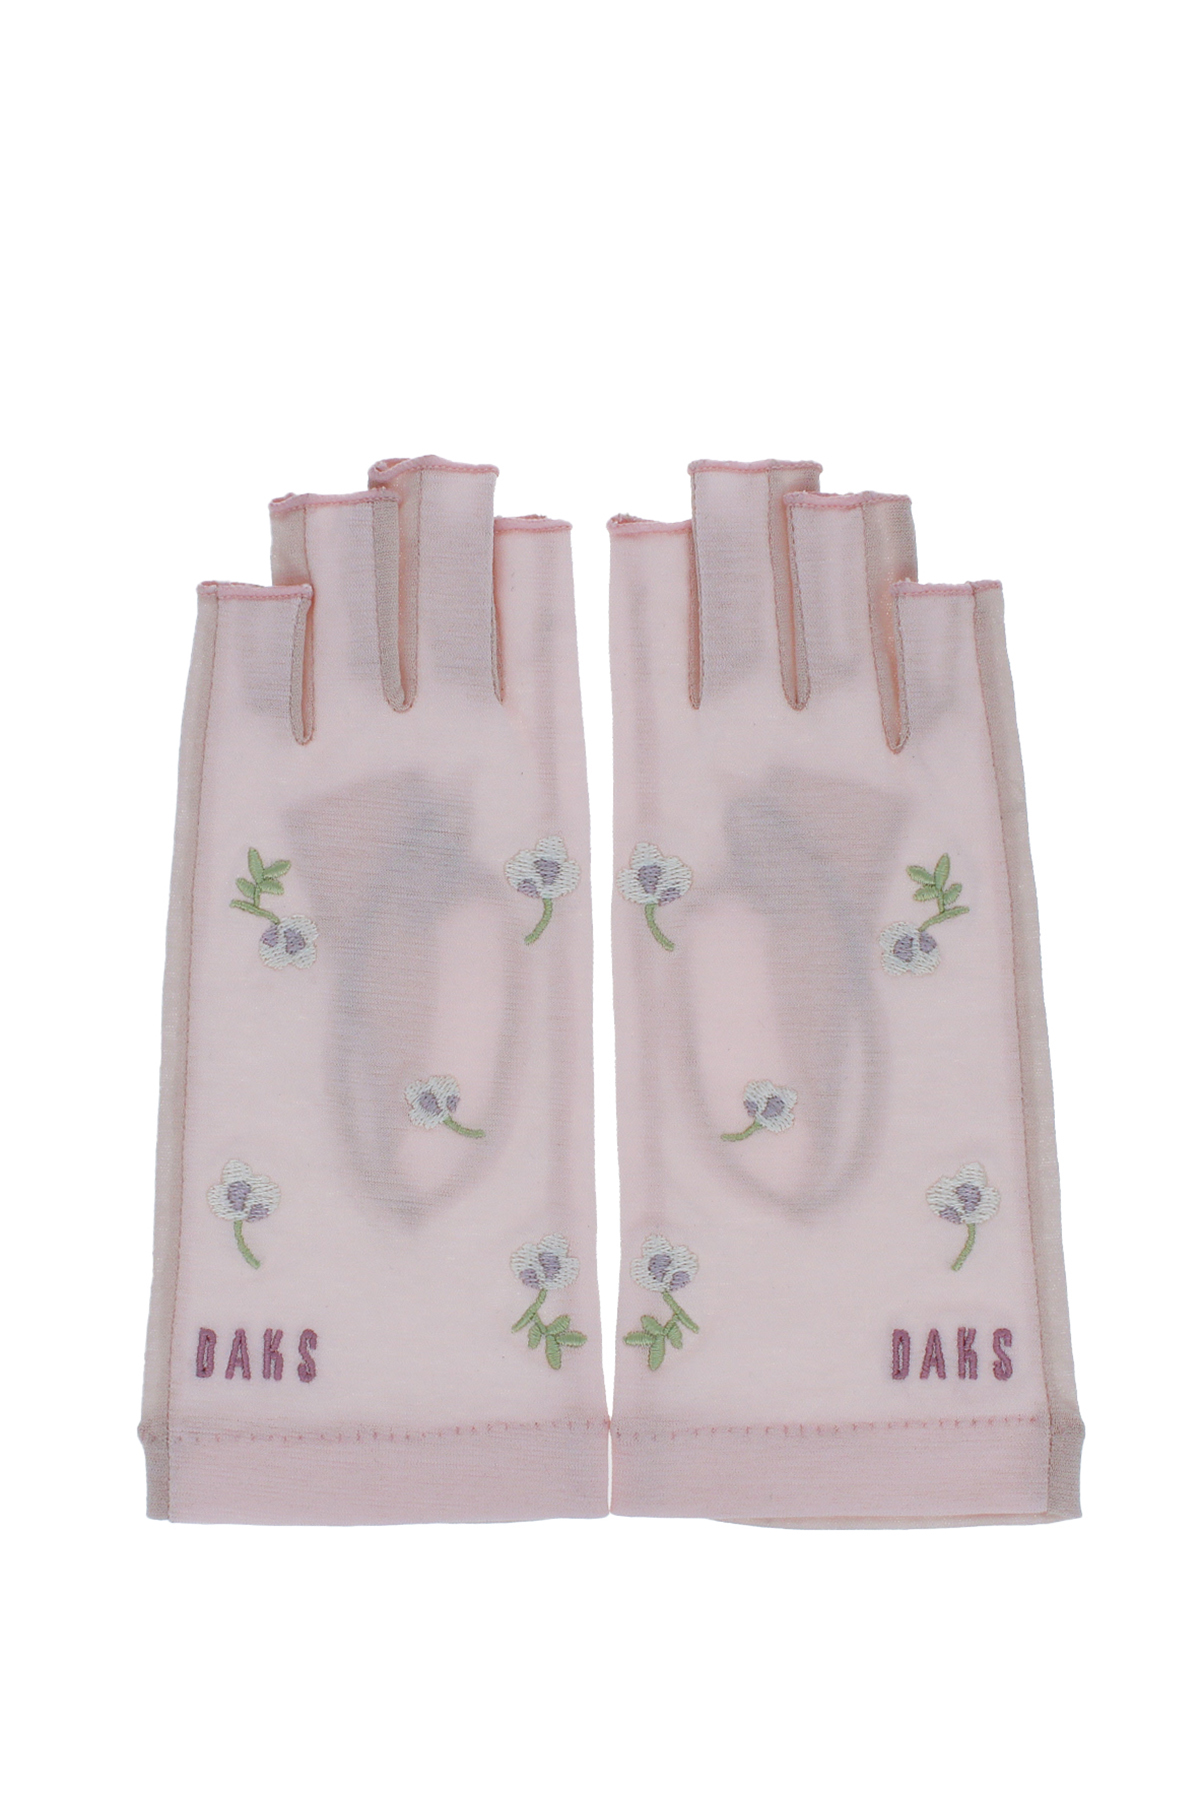 【WOMEN】UV手袋 ショート丈 指先カット 接触冷感   詳細画像 16/Lピンク